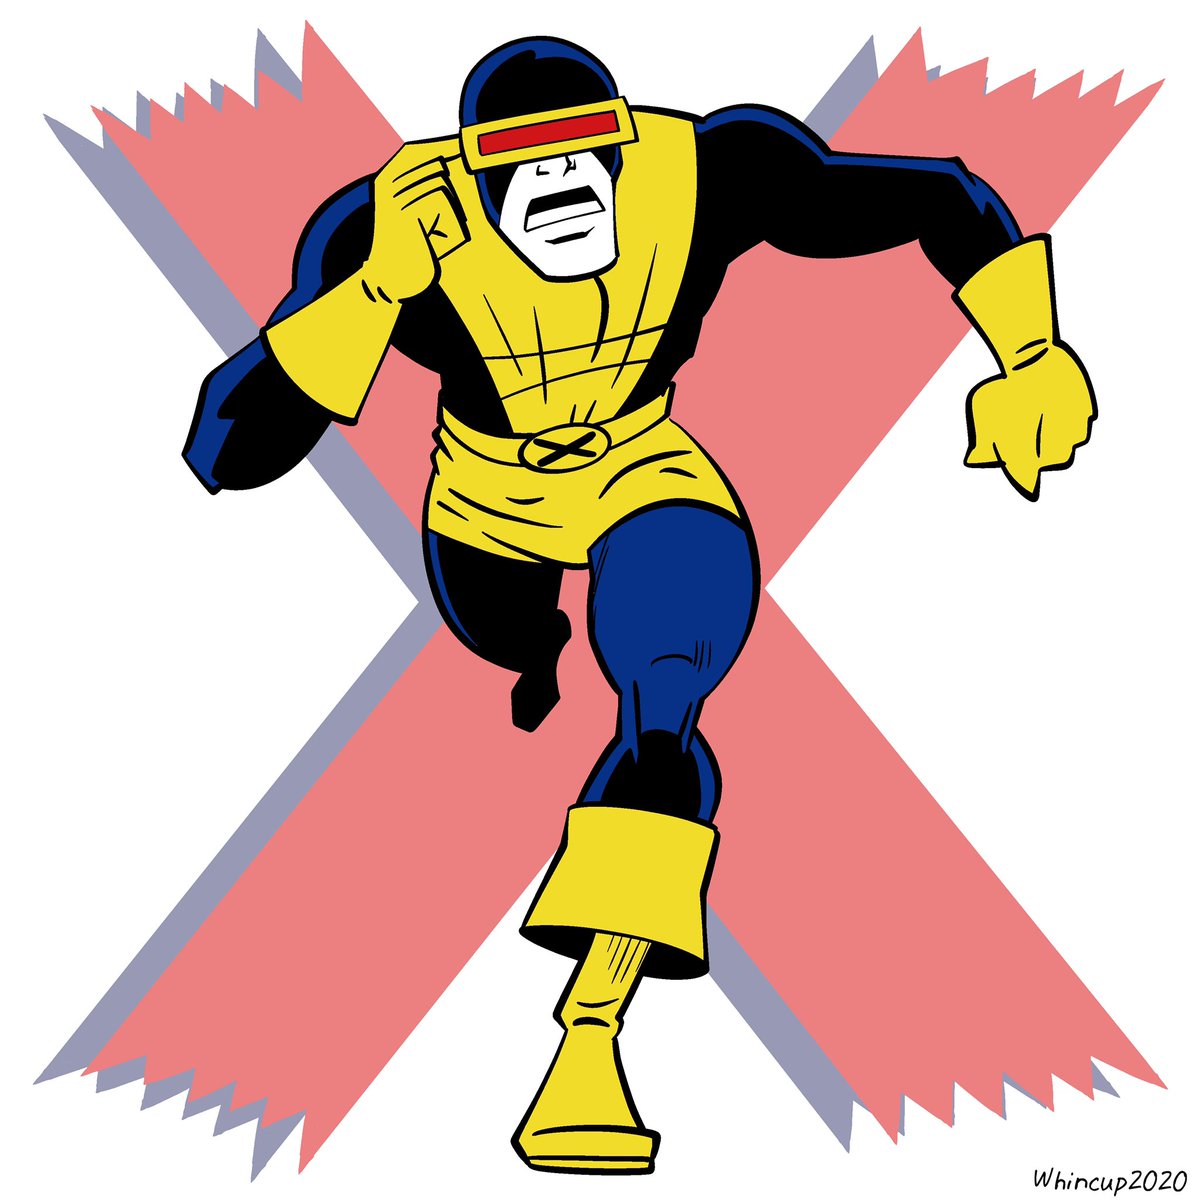 #jacktober — day 8: X-Men #jacktober2020 #jacktoberart #jackkirby #jackkirbyart #xmen #cyclops #scottsummers #angel #beast #marvelgirl #iceman #marvel #marvelcomics #mcu #comics #comicbooks #comicart #superhero #superheroart #comic #comicbookart #illustration #illustrator